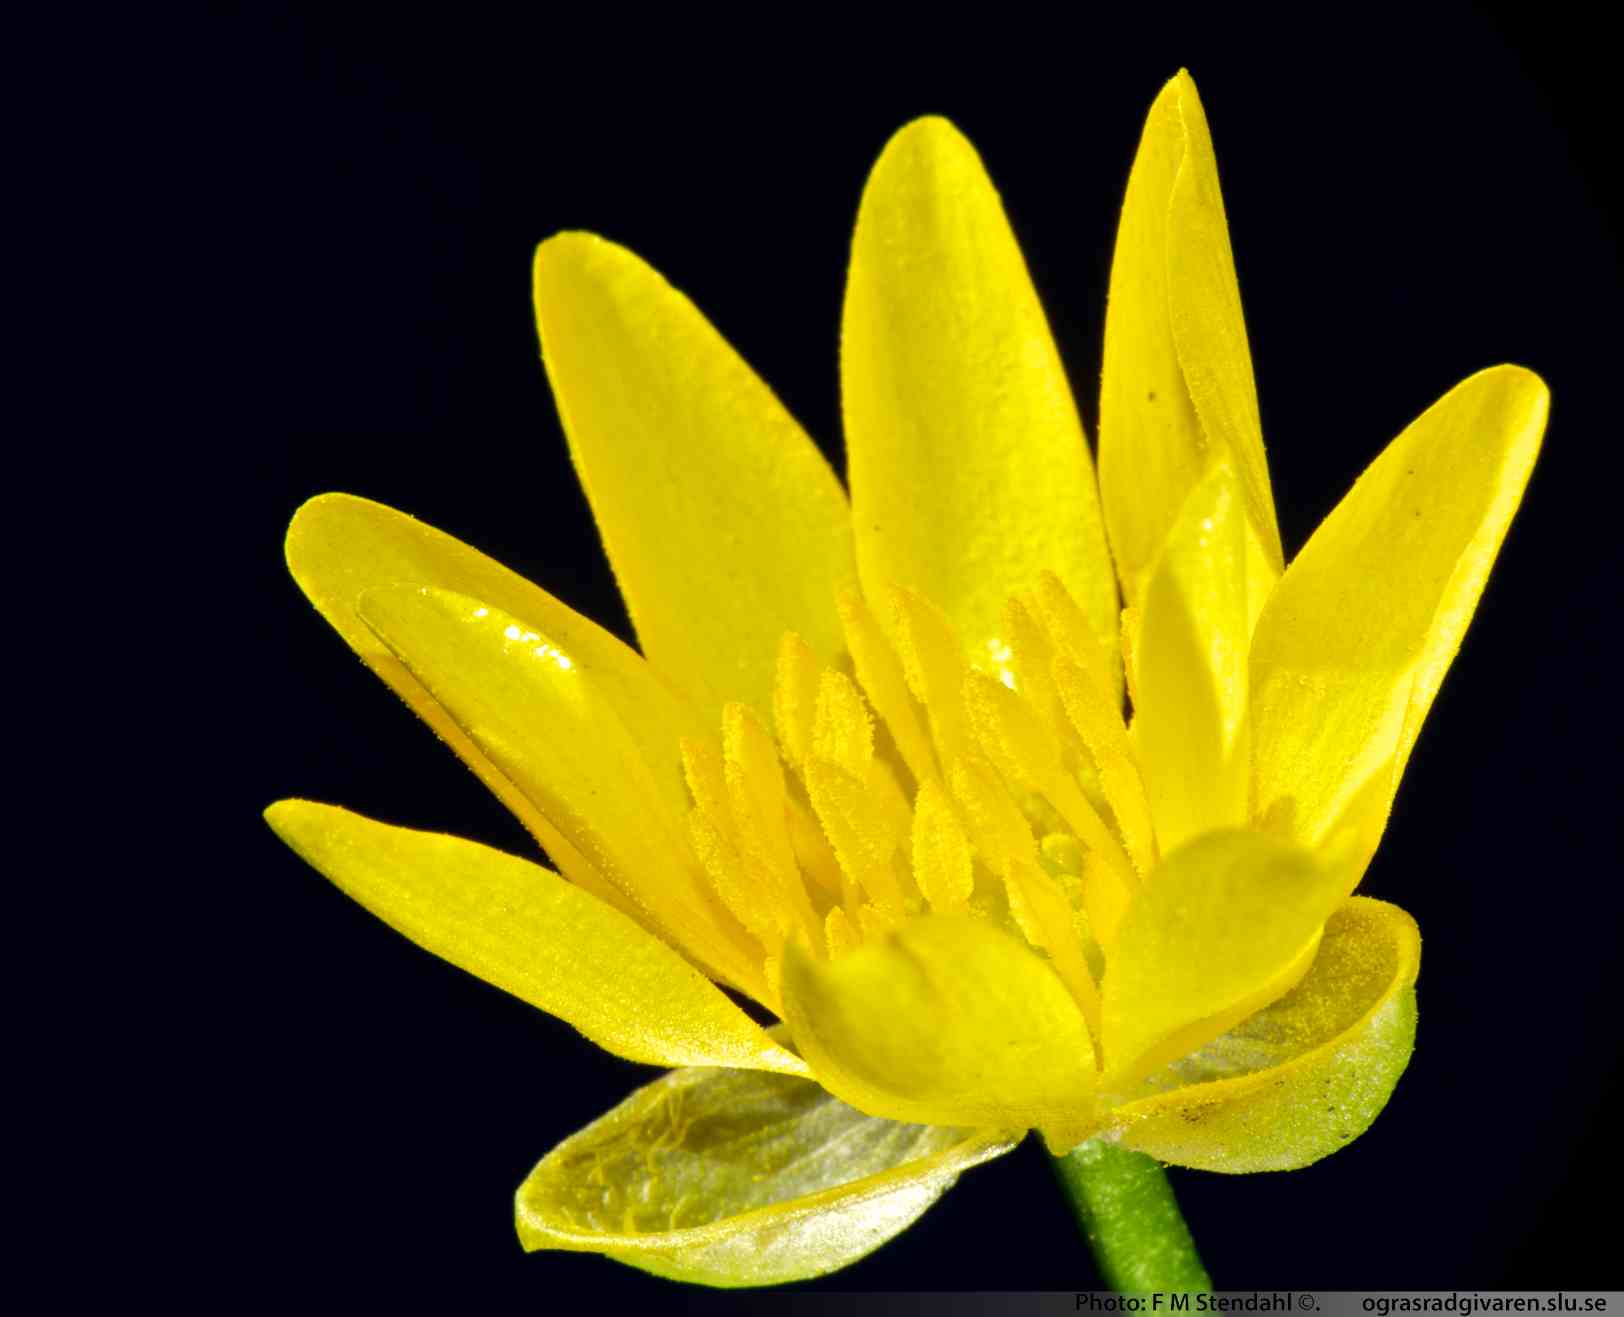 Blommor 1,5-2,5 cm breda, kupade foderblad.